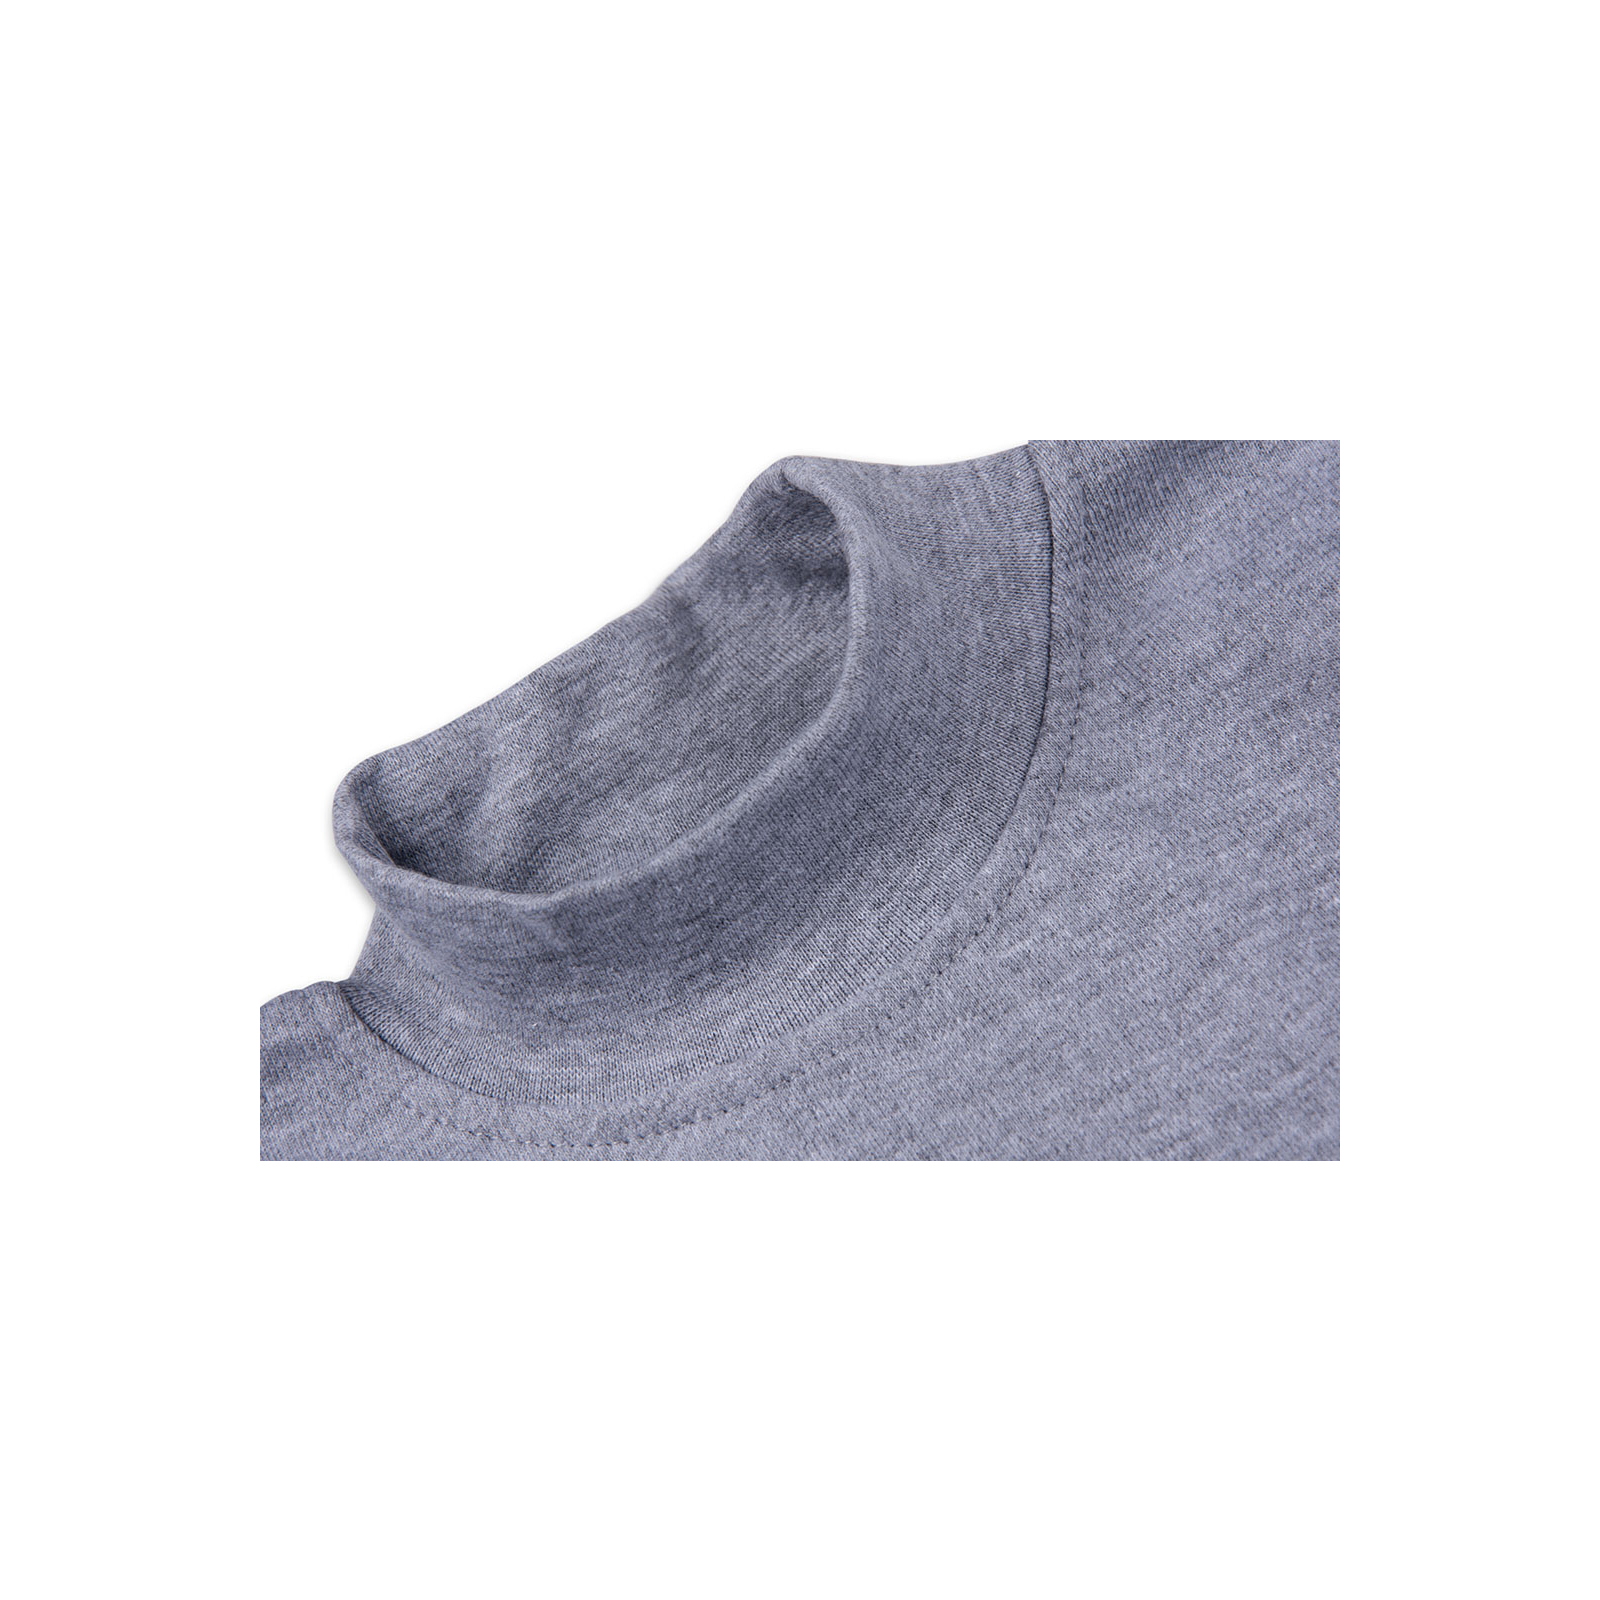 Кофта Lovetti водолазка серая меланжевая (1012-128-gray) изображение 3